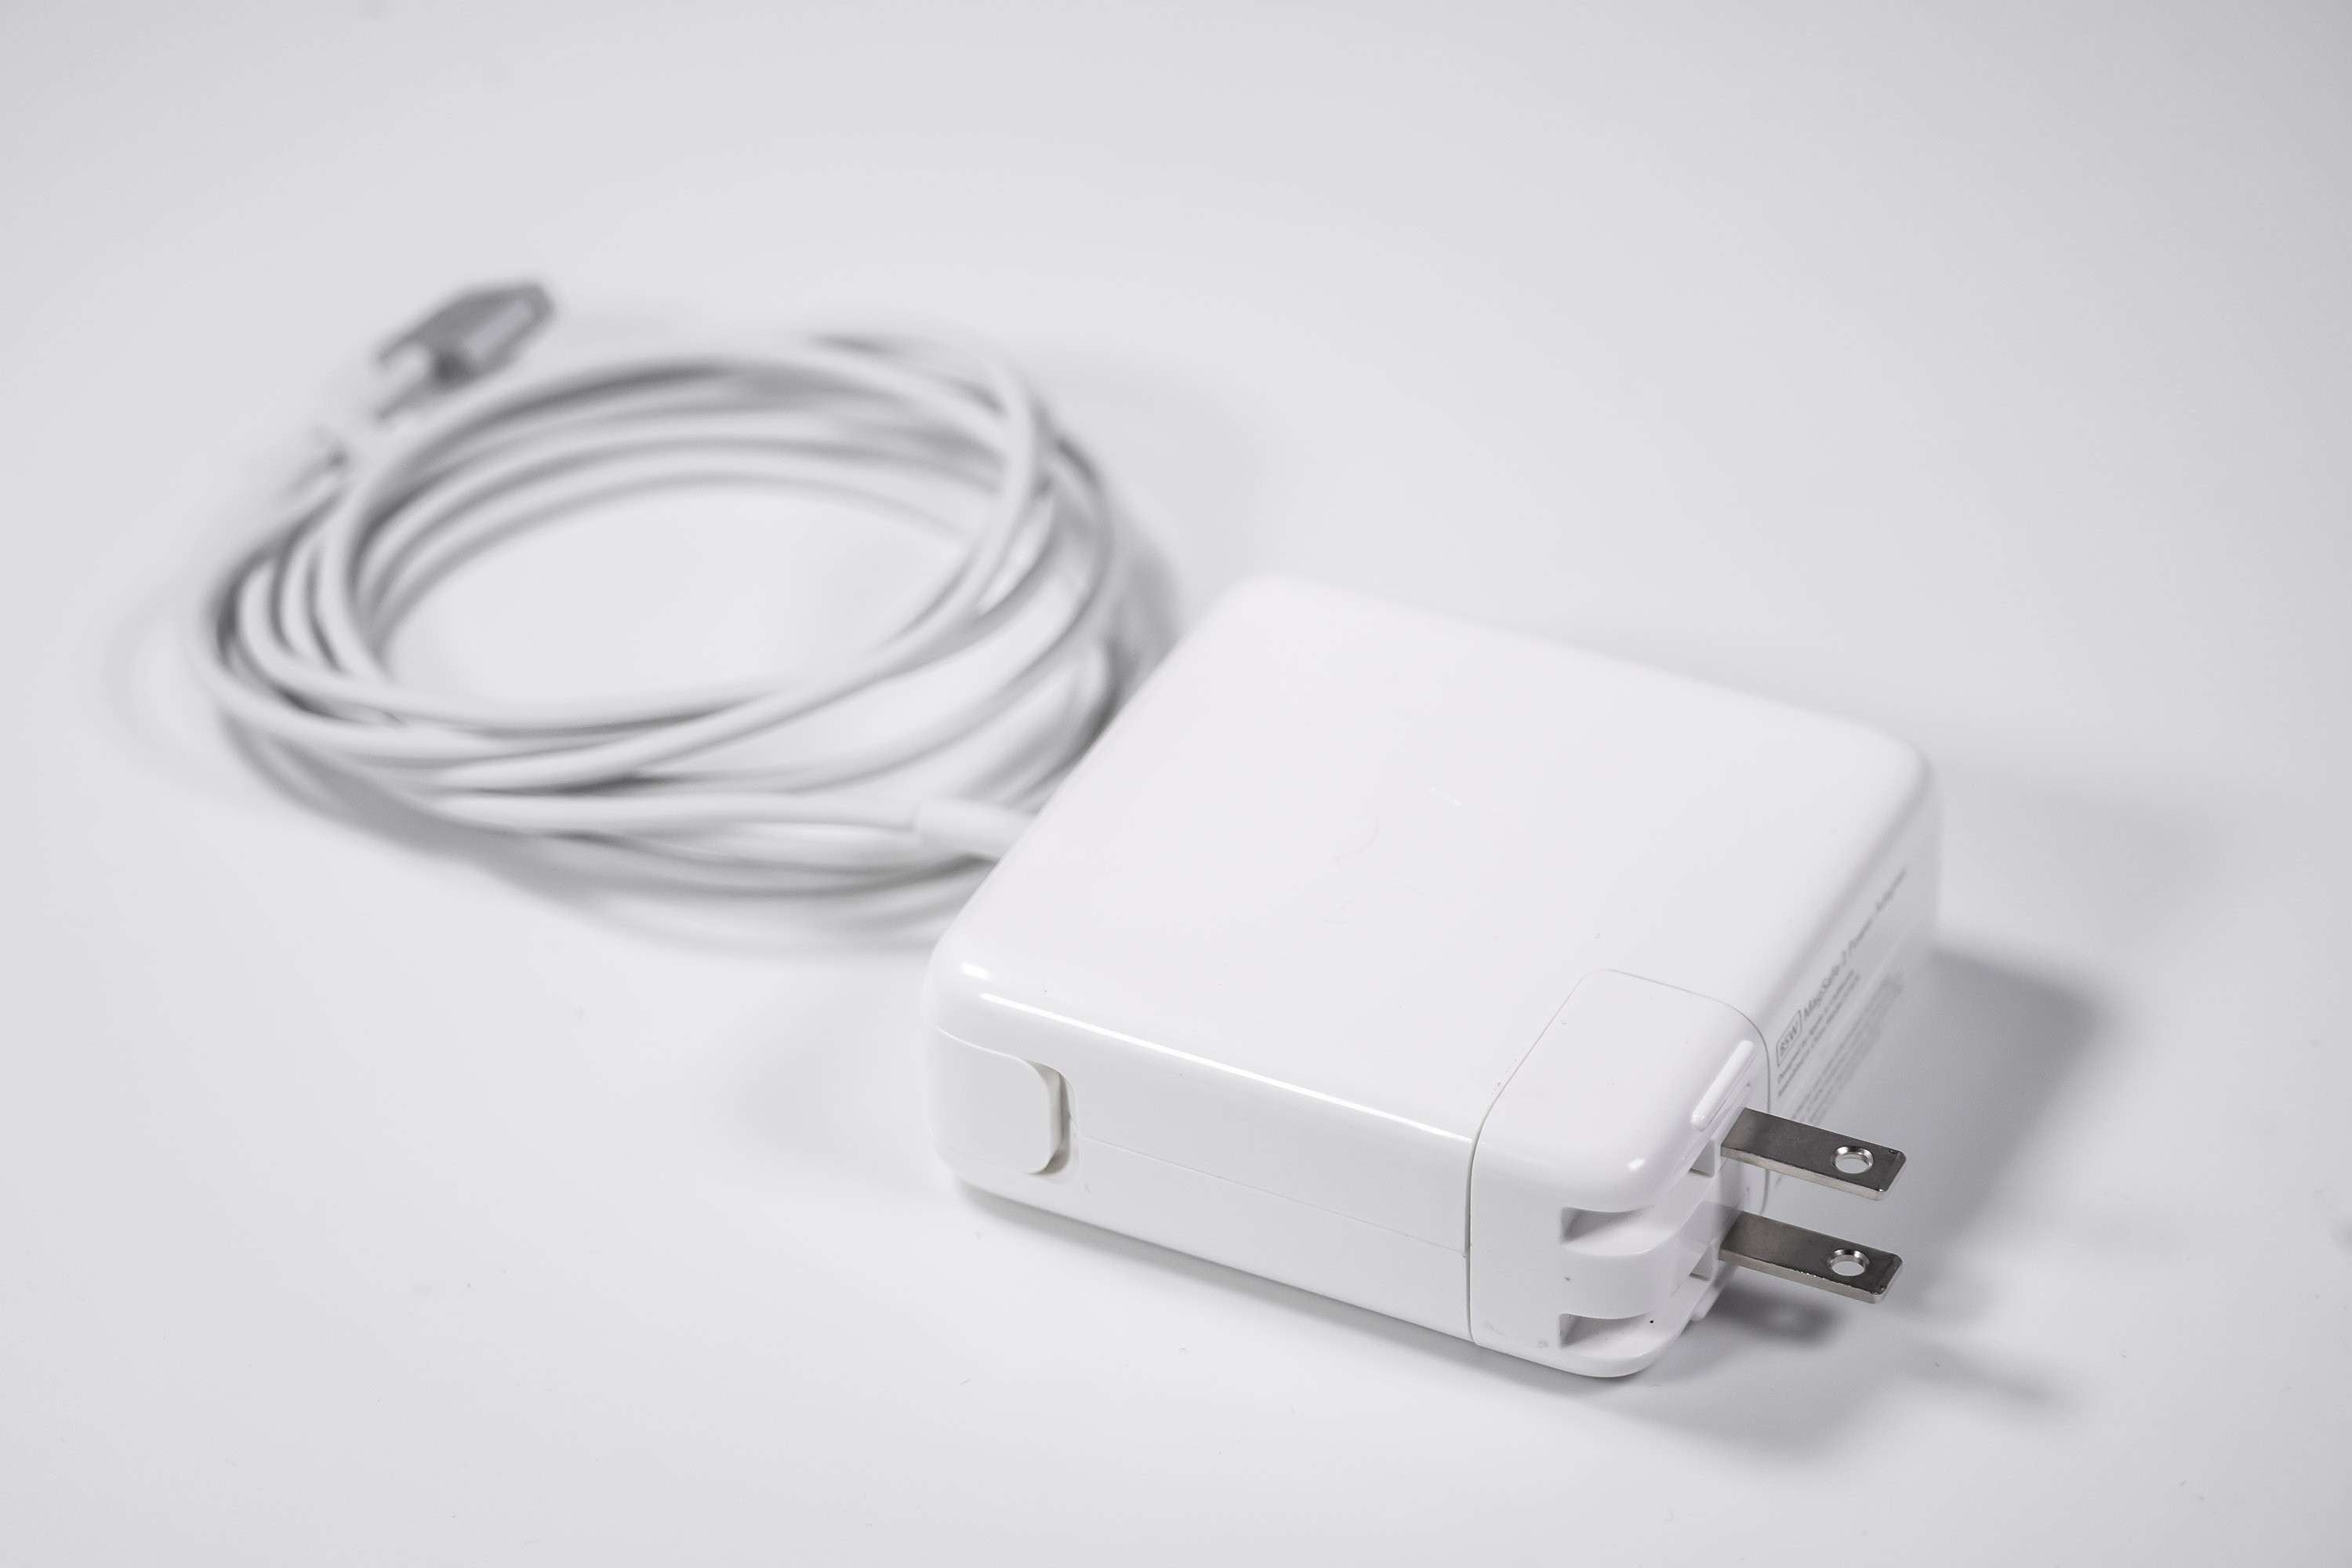 Apple MagSafe 2 - 60 W - Chargeur pour MacBook Pro 13 Retina